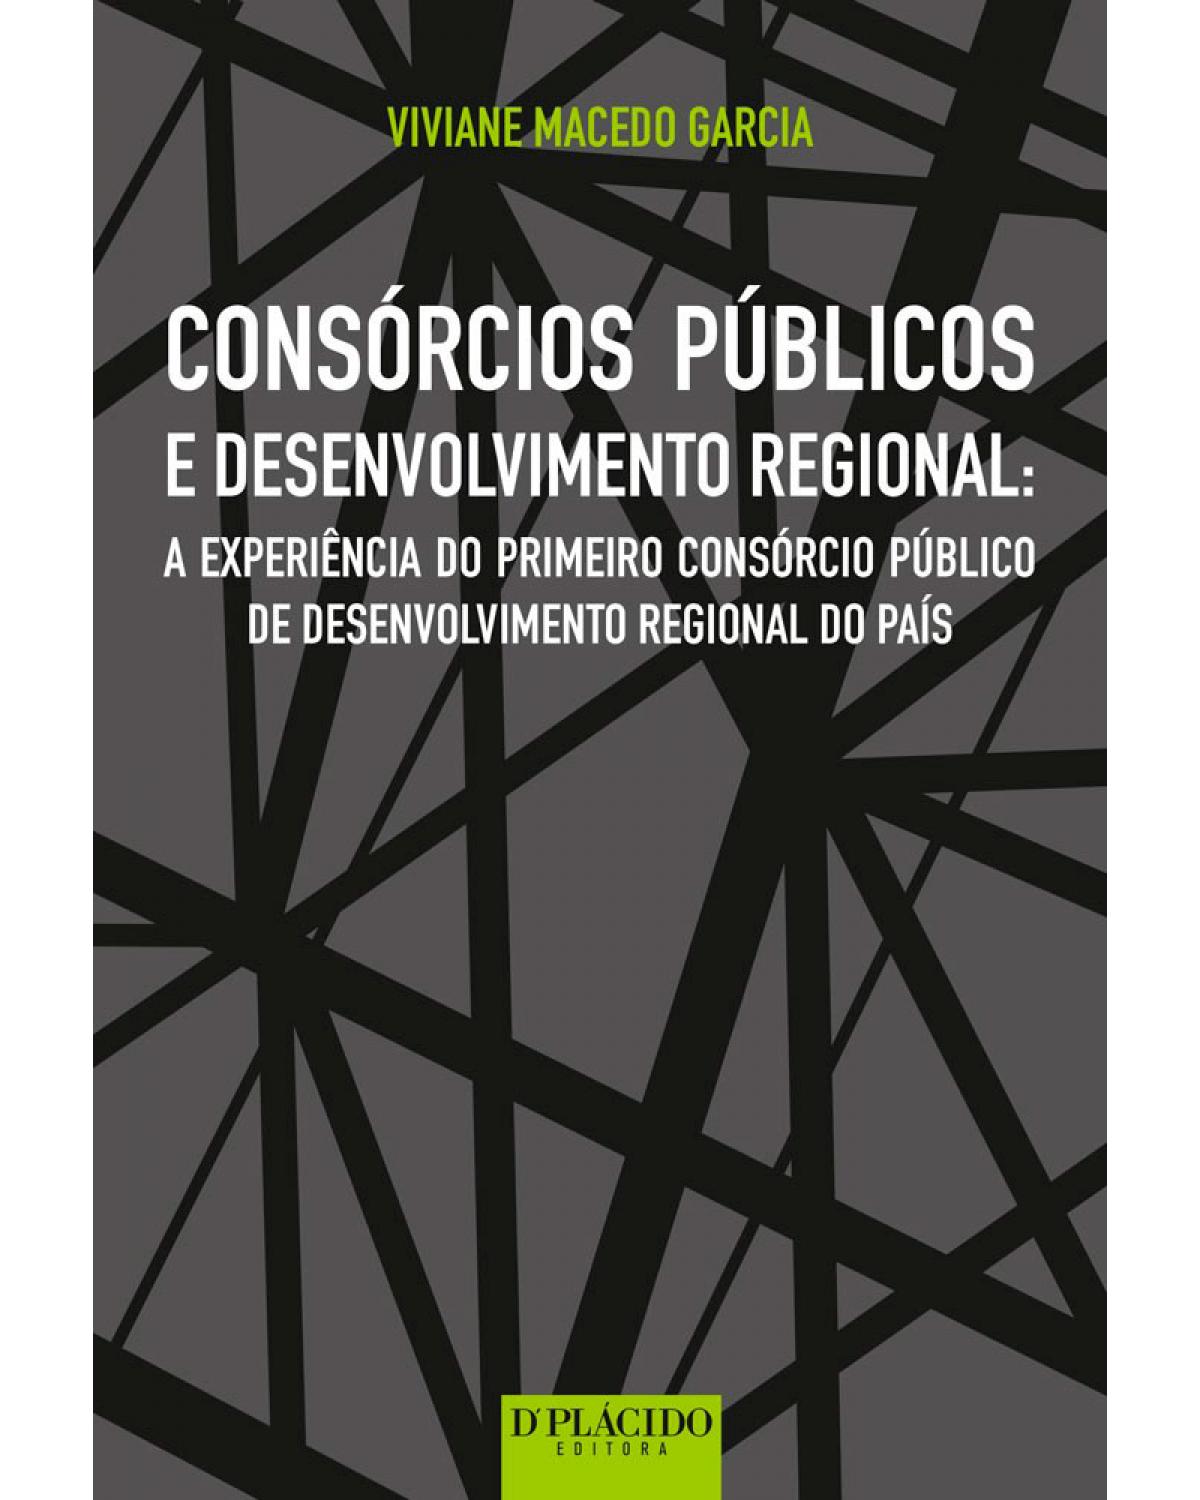 Consórcios públicos e desenvolvimento regional: a experiência do primeiro consórcio público de desenvolvimento regional do país - 1ª Edição | 2016